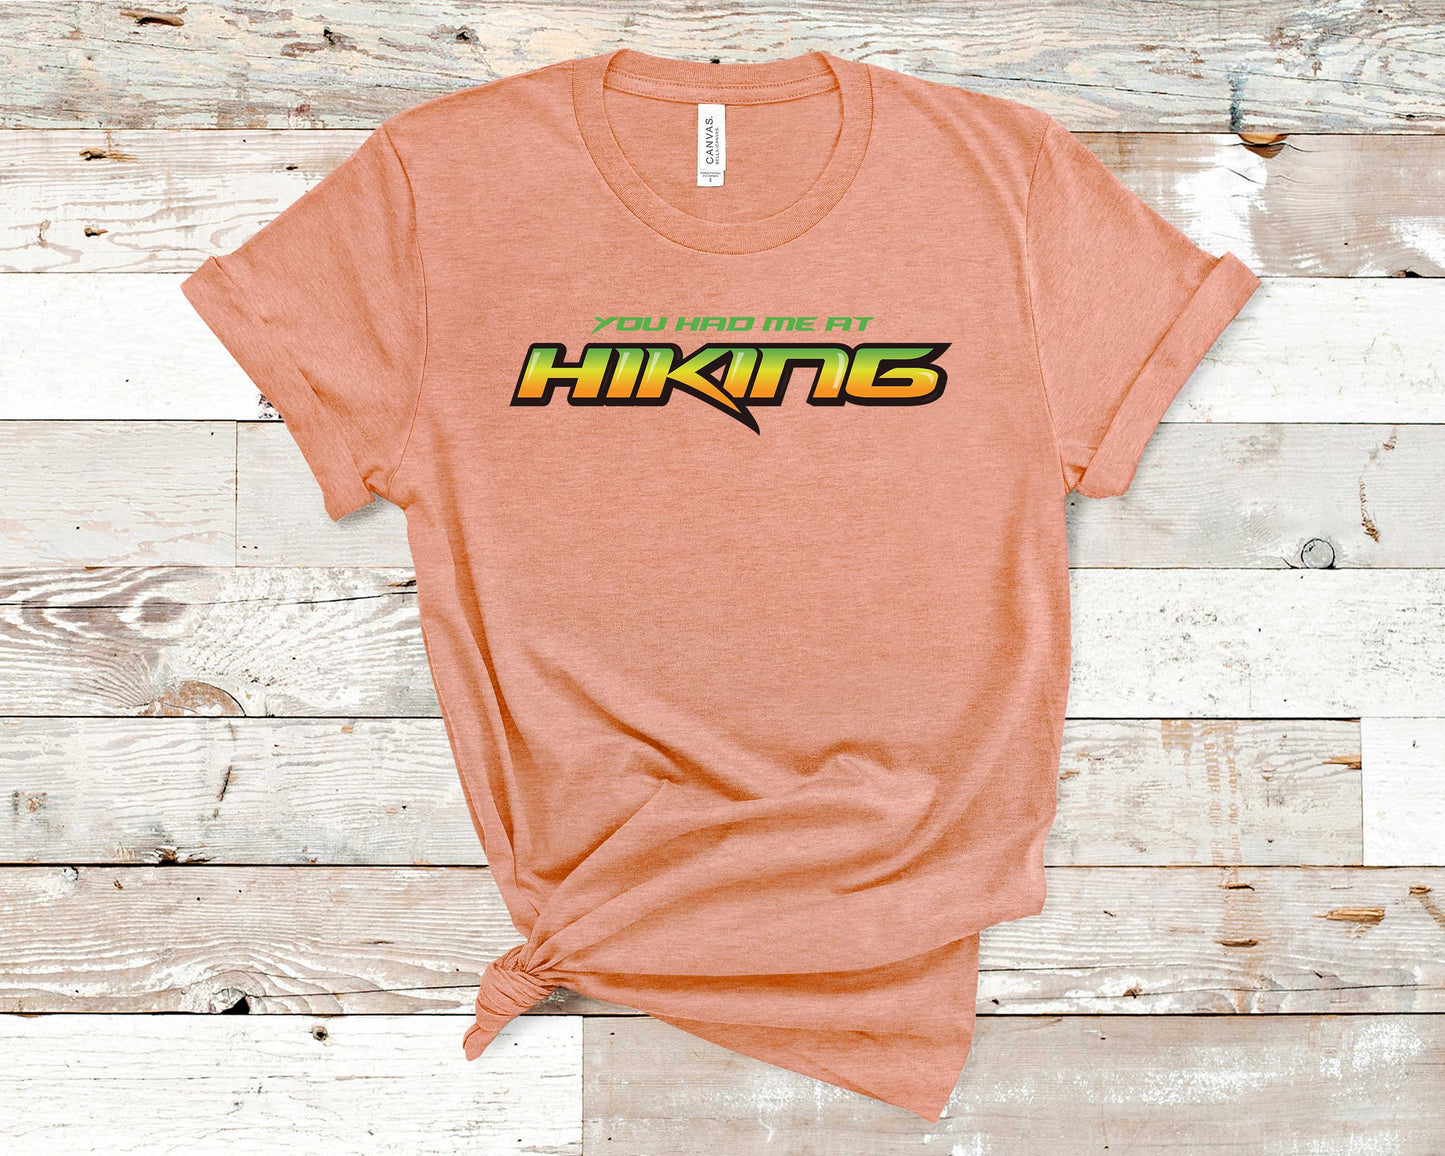 You Had Me at Hiking - Fitness Shirt